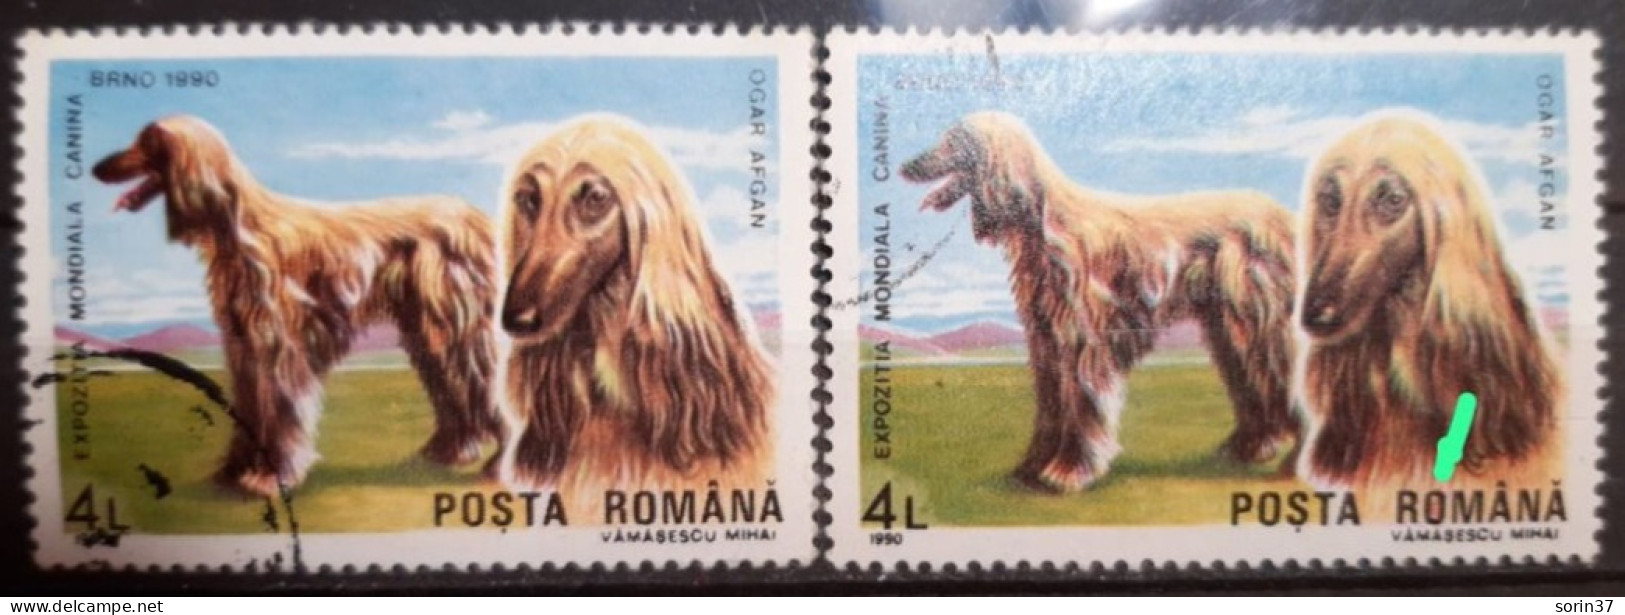 RUMANIA / ROMANIA / Error Año 1990 Yvert Nr. 3875 Usado O De Romania, Rojo Por Dentro - Varietà & Curiosità